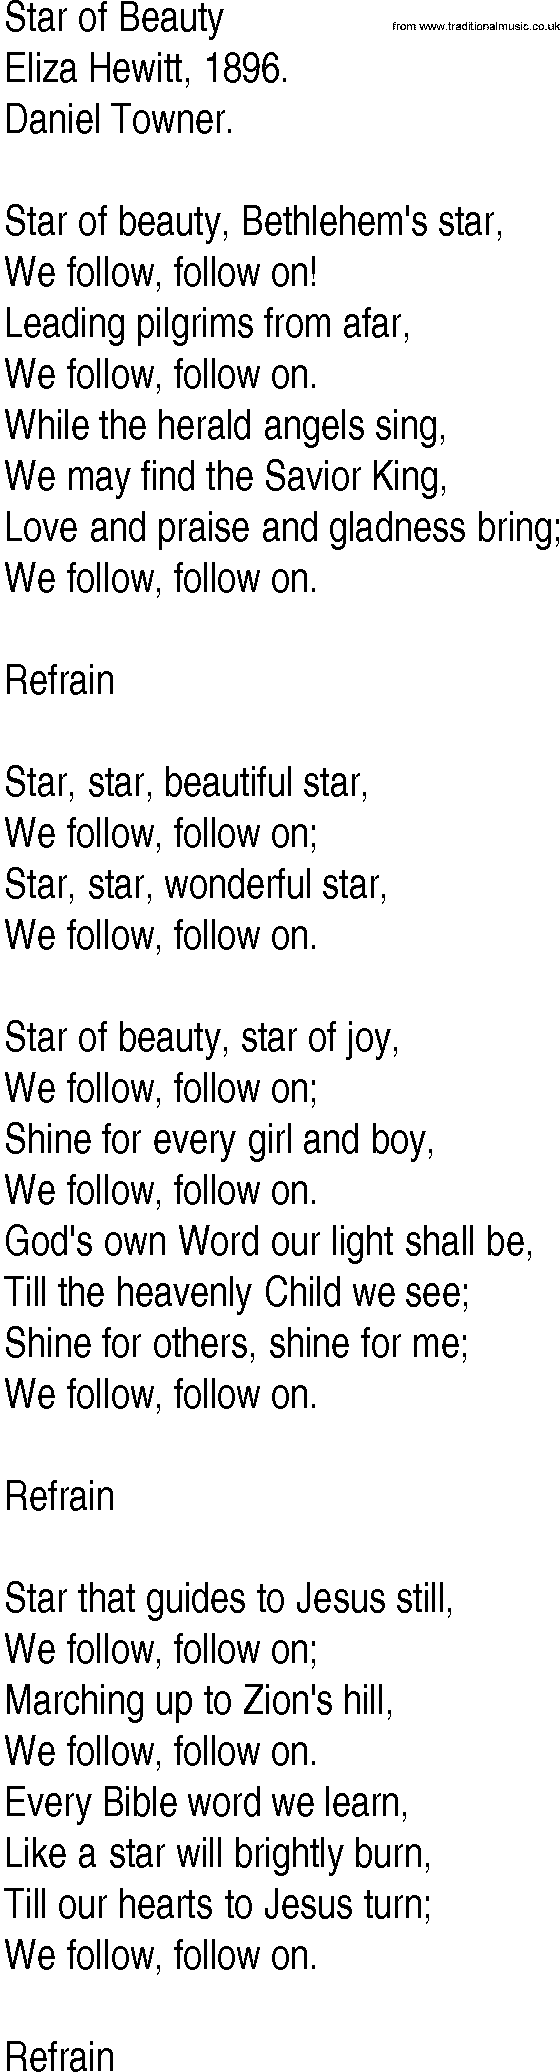 Hymn and Gospel Song: Star of Beauty by Eliza Hewitt lyrics